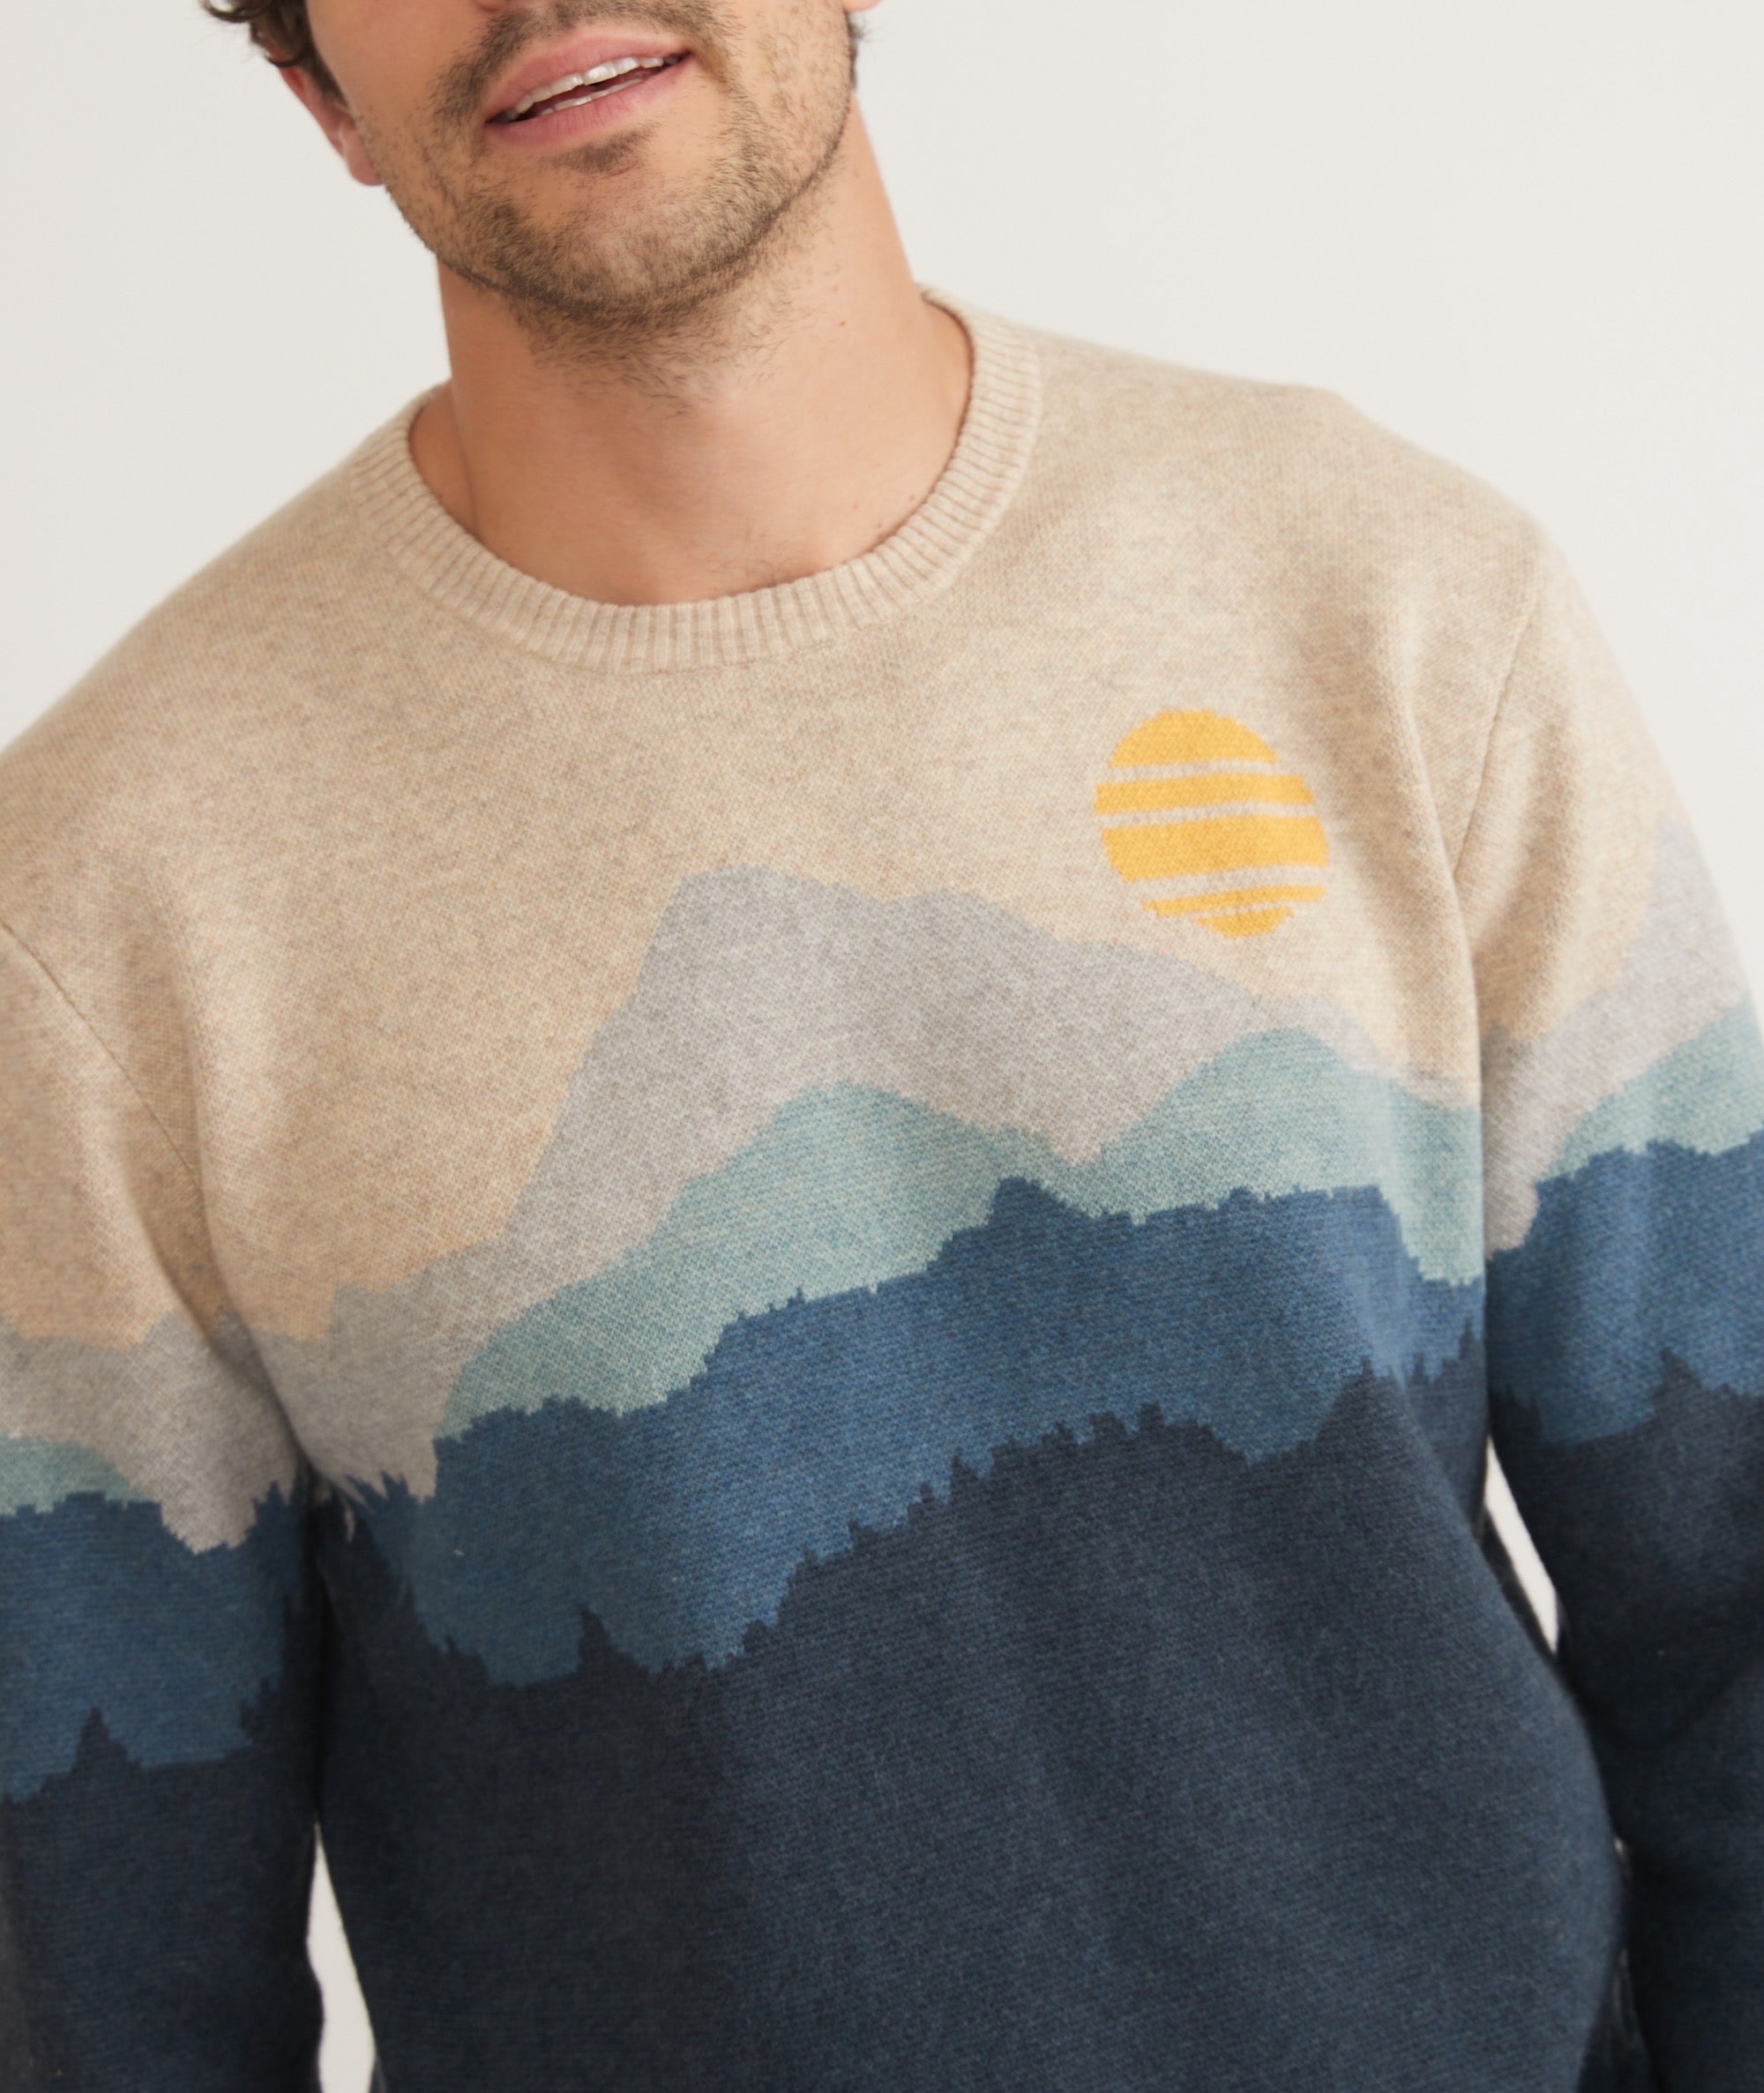 Archive Calama – Marine Layer Sweater